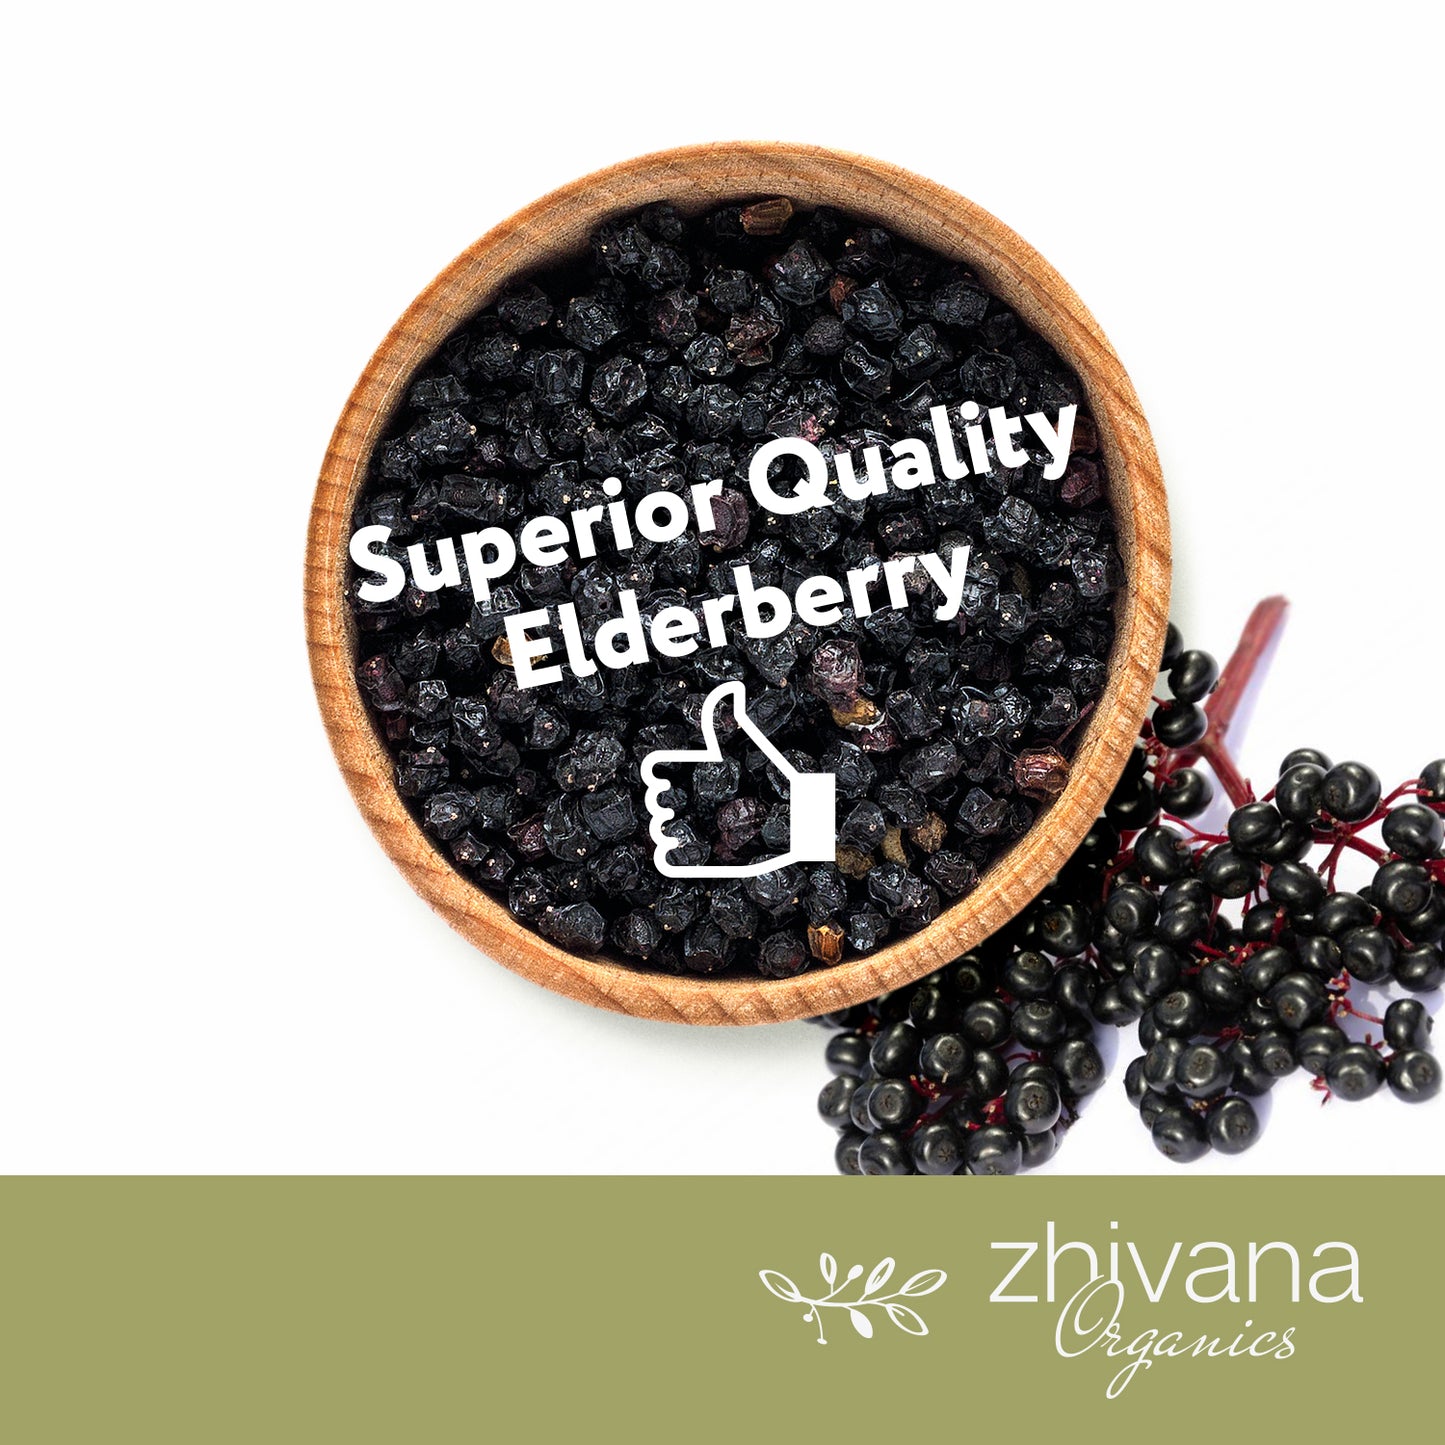 Elderberry Whole Dried - Zhivana Organics